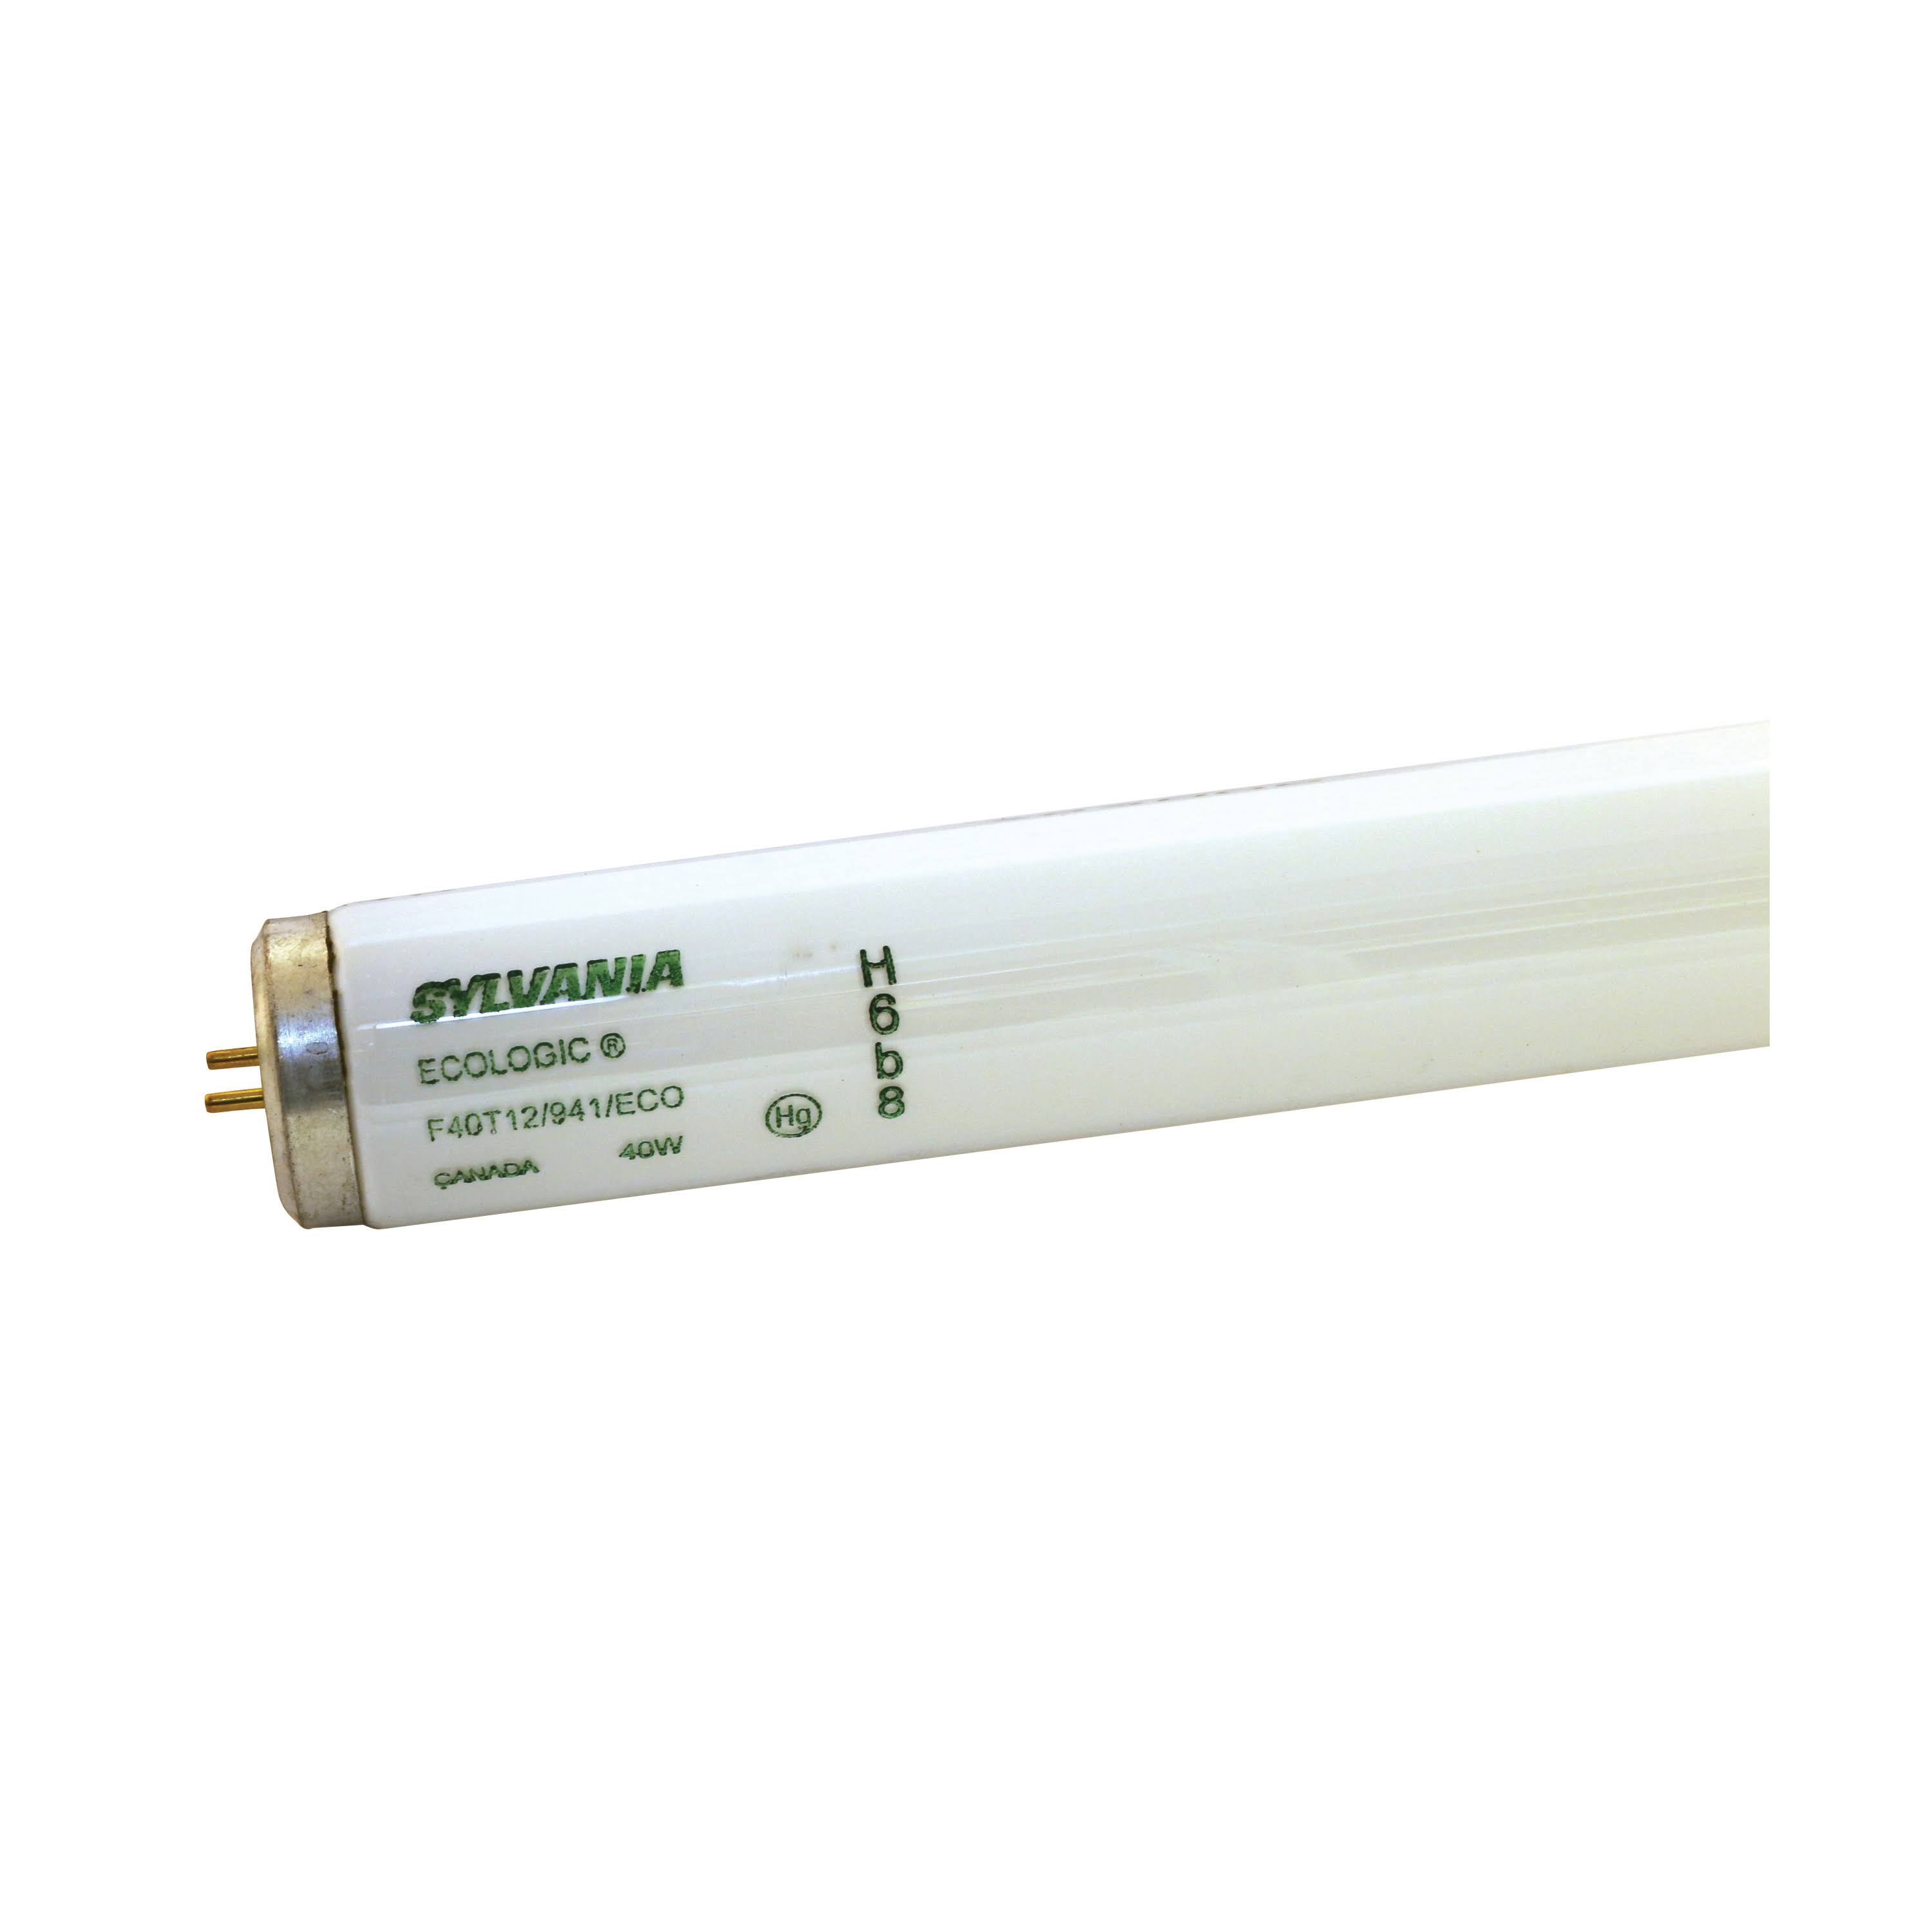 Sylvania 22435 Linear Fluorescent Lamp - 40W, T12